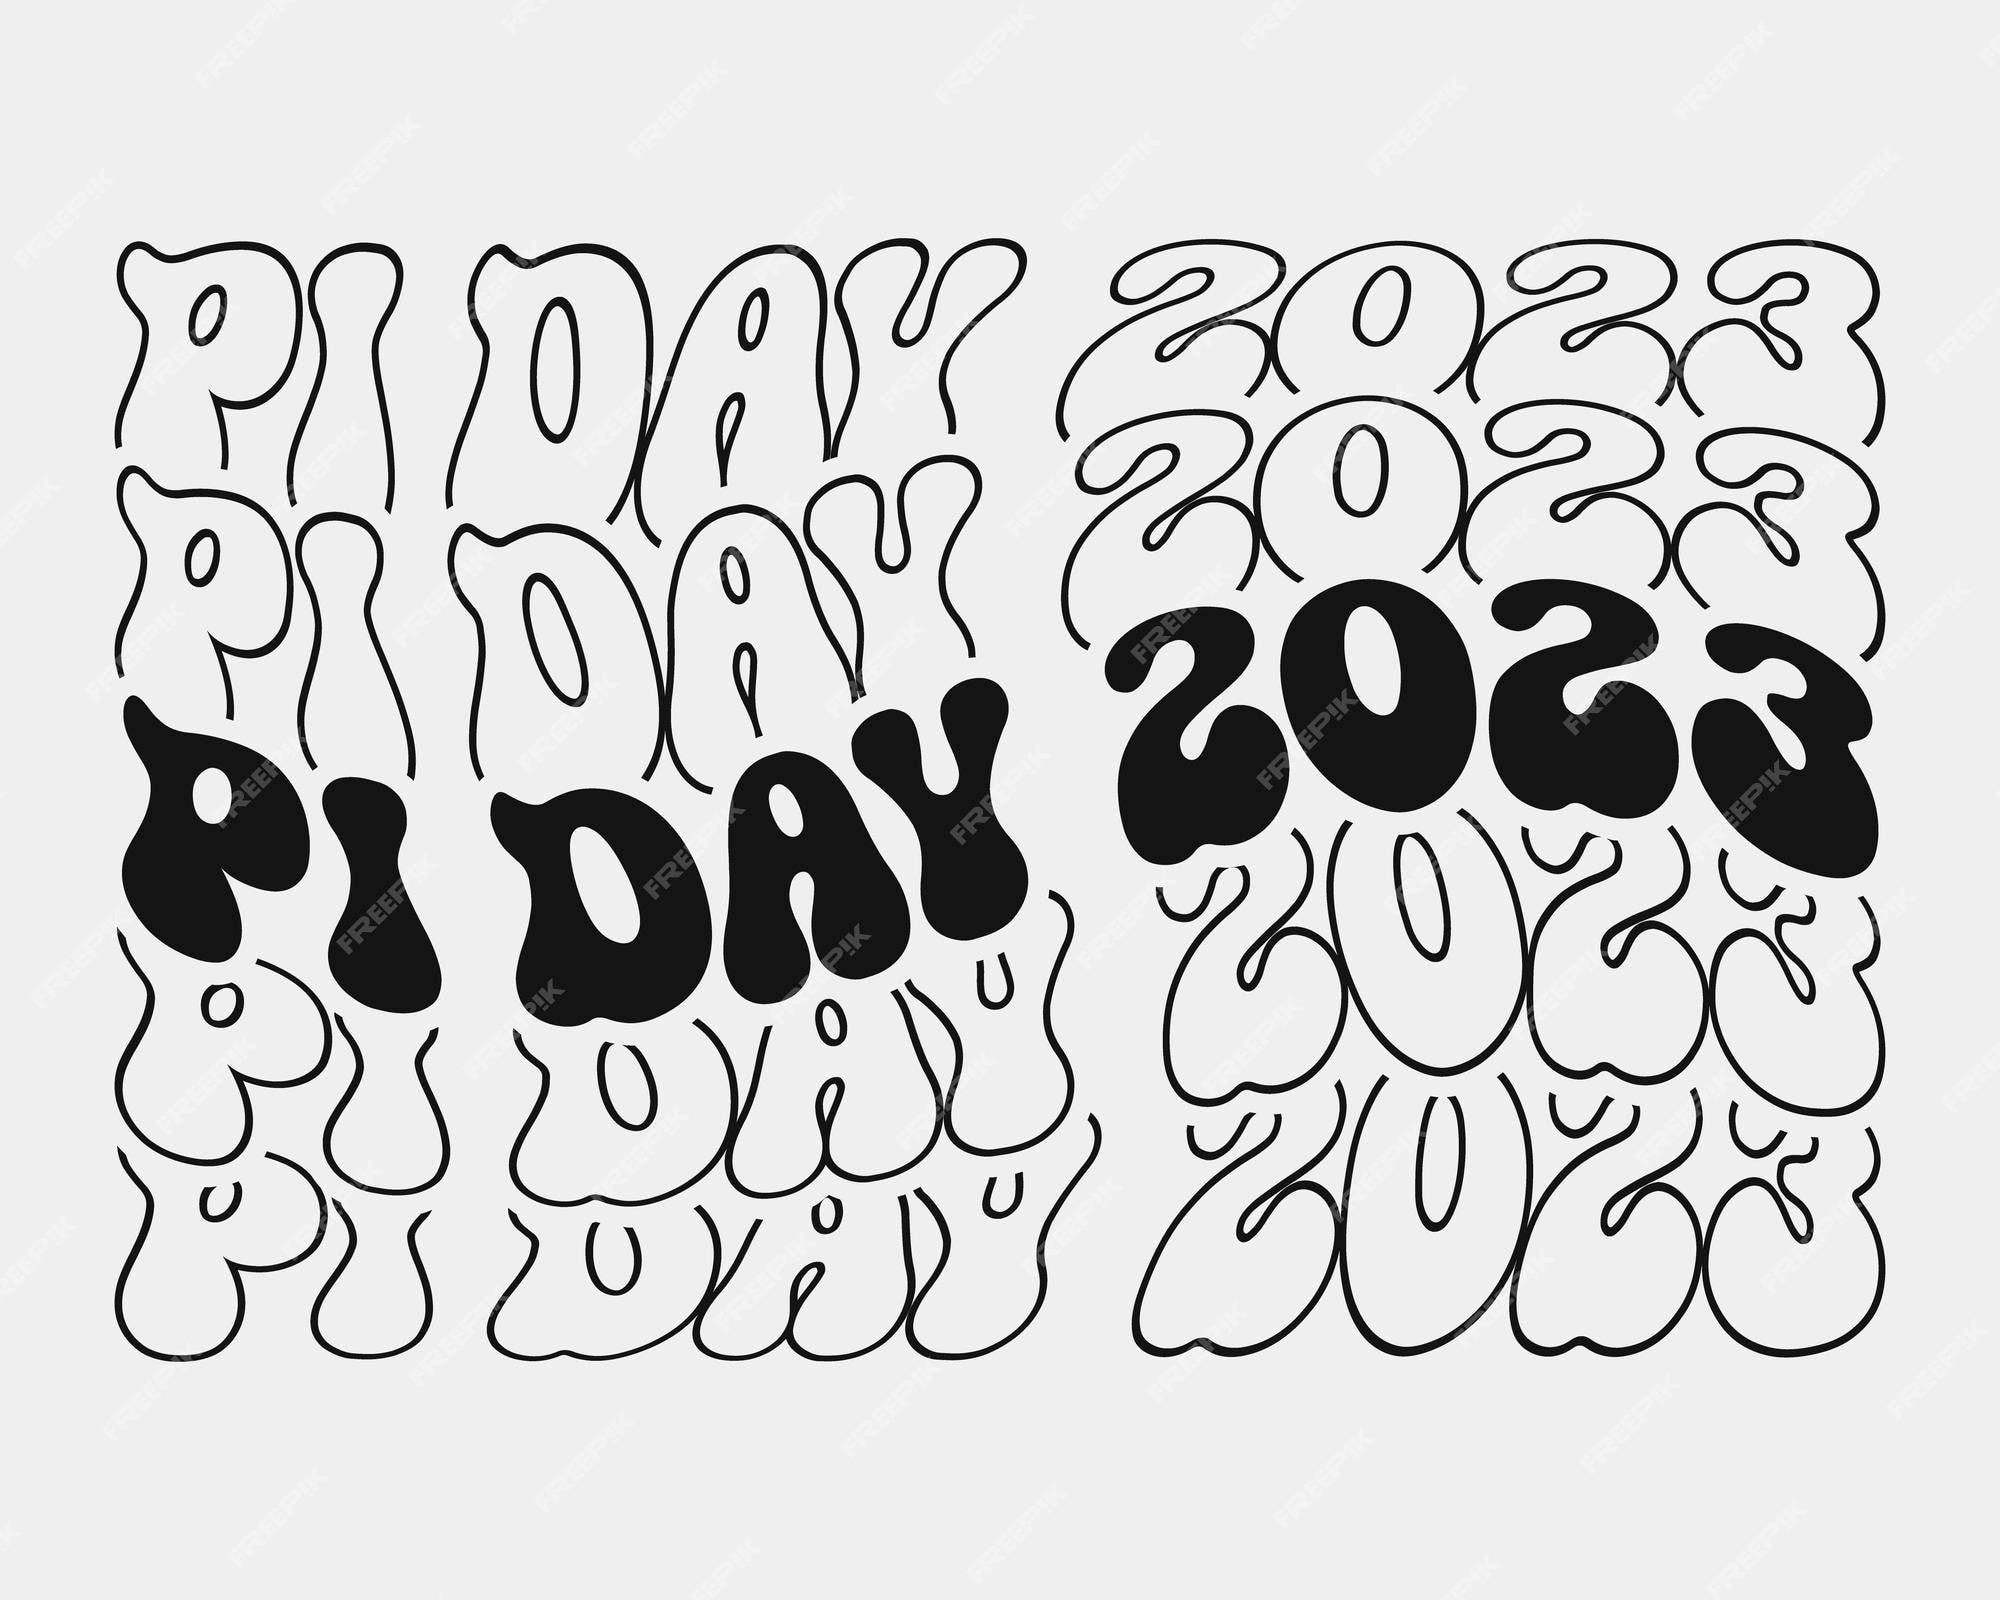 Premium vector pi day phrase retro groovy wavy repeat text mirrored typographic art on white background